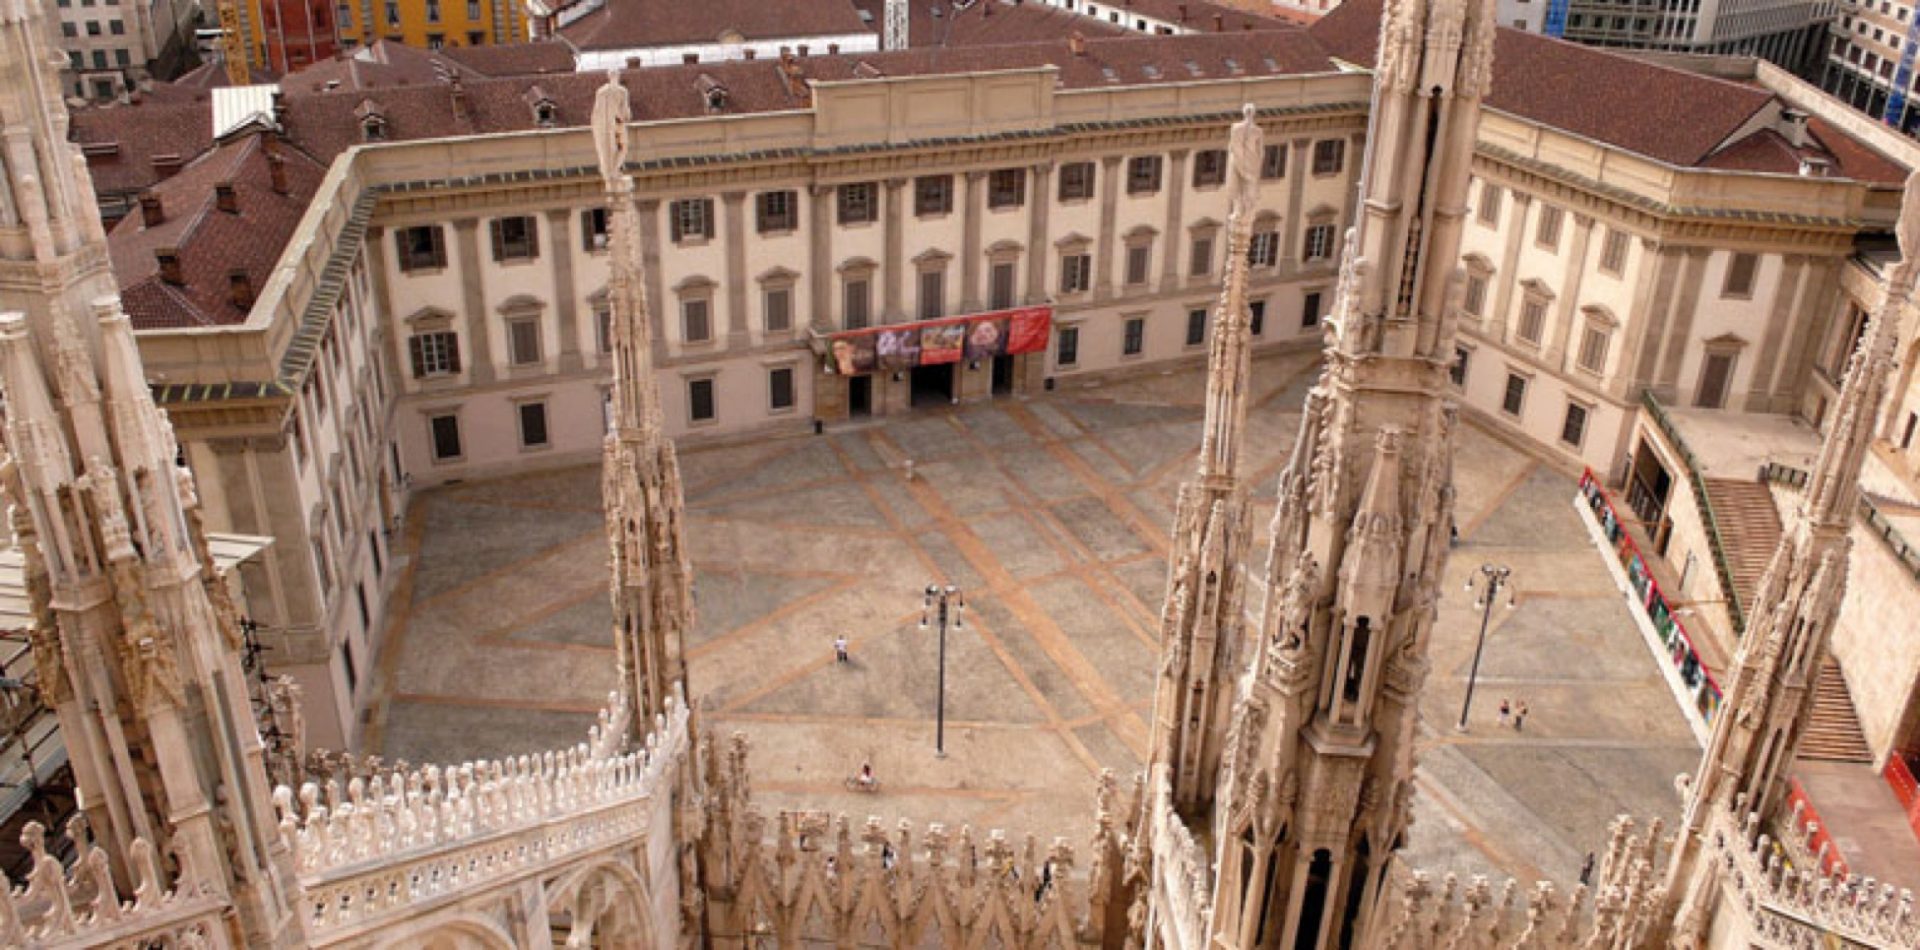 Palazzo-Reale-Milano-.jpg